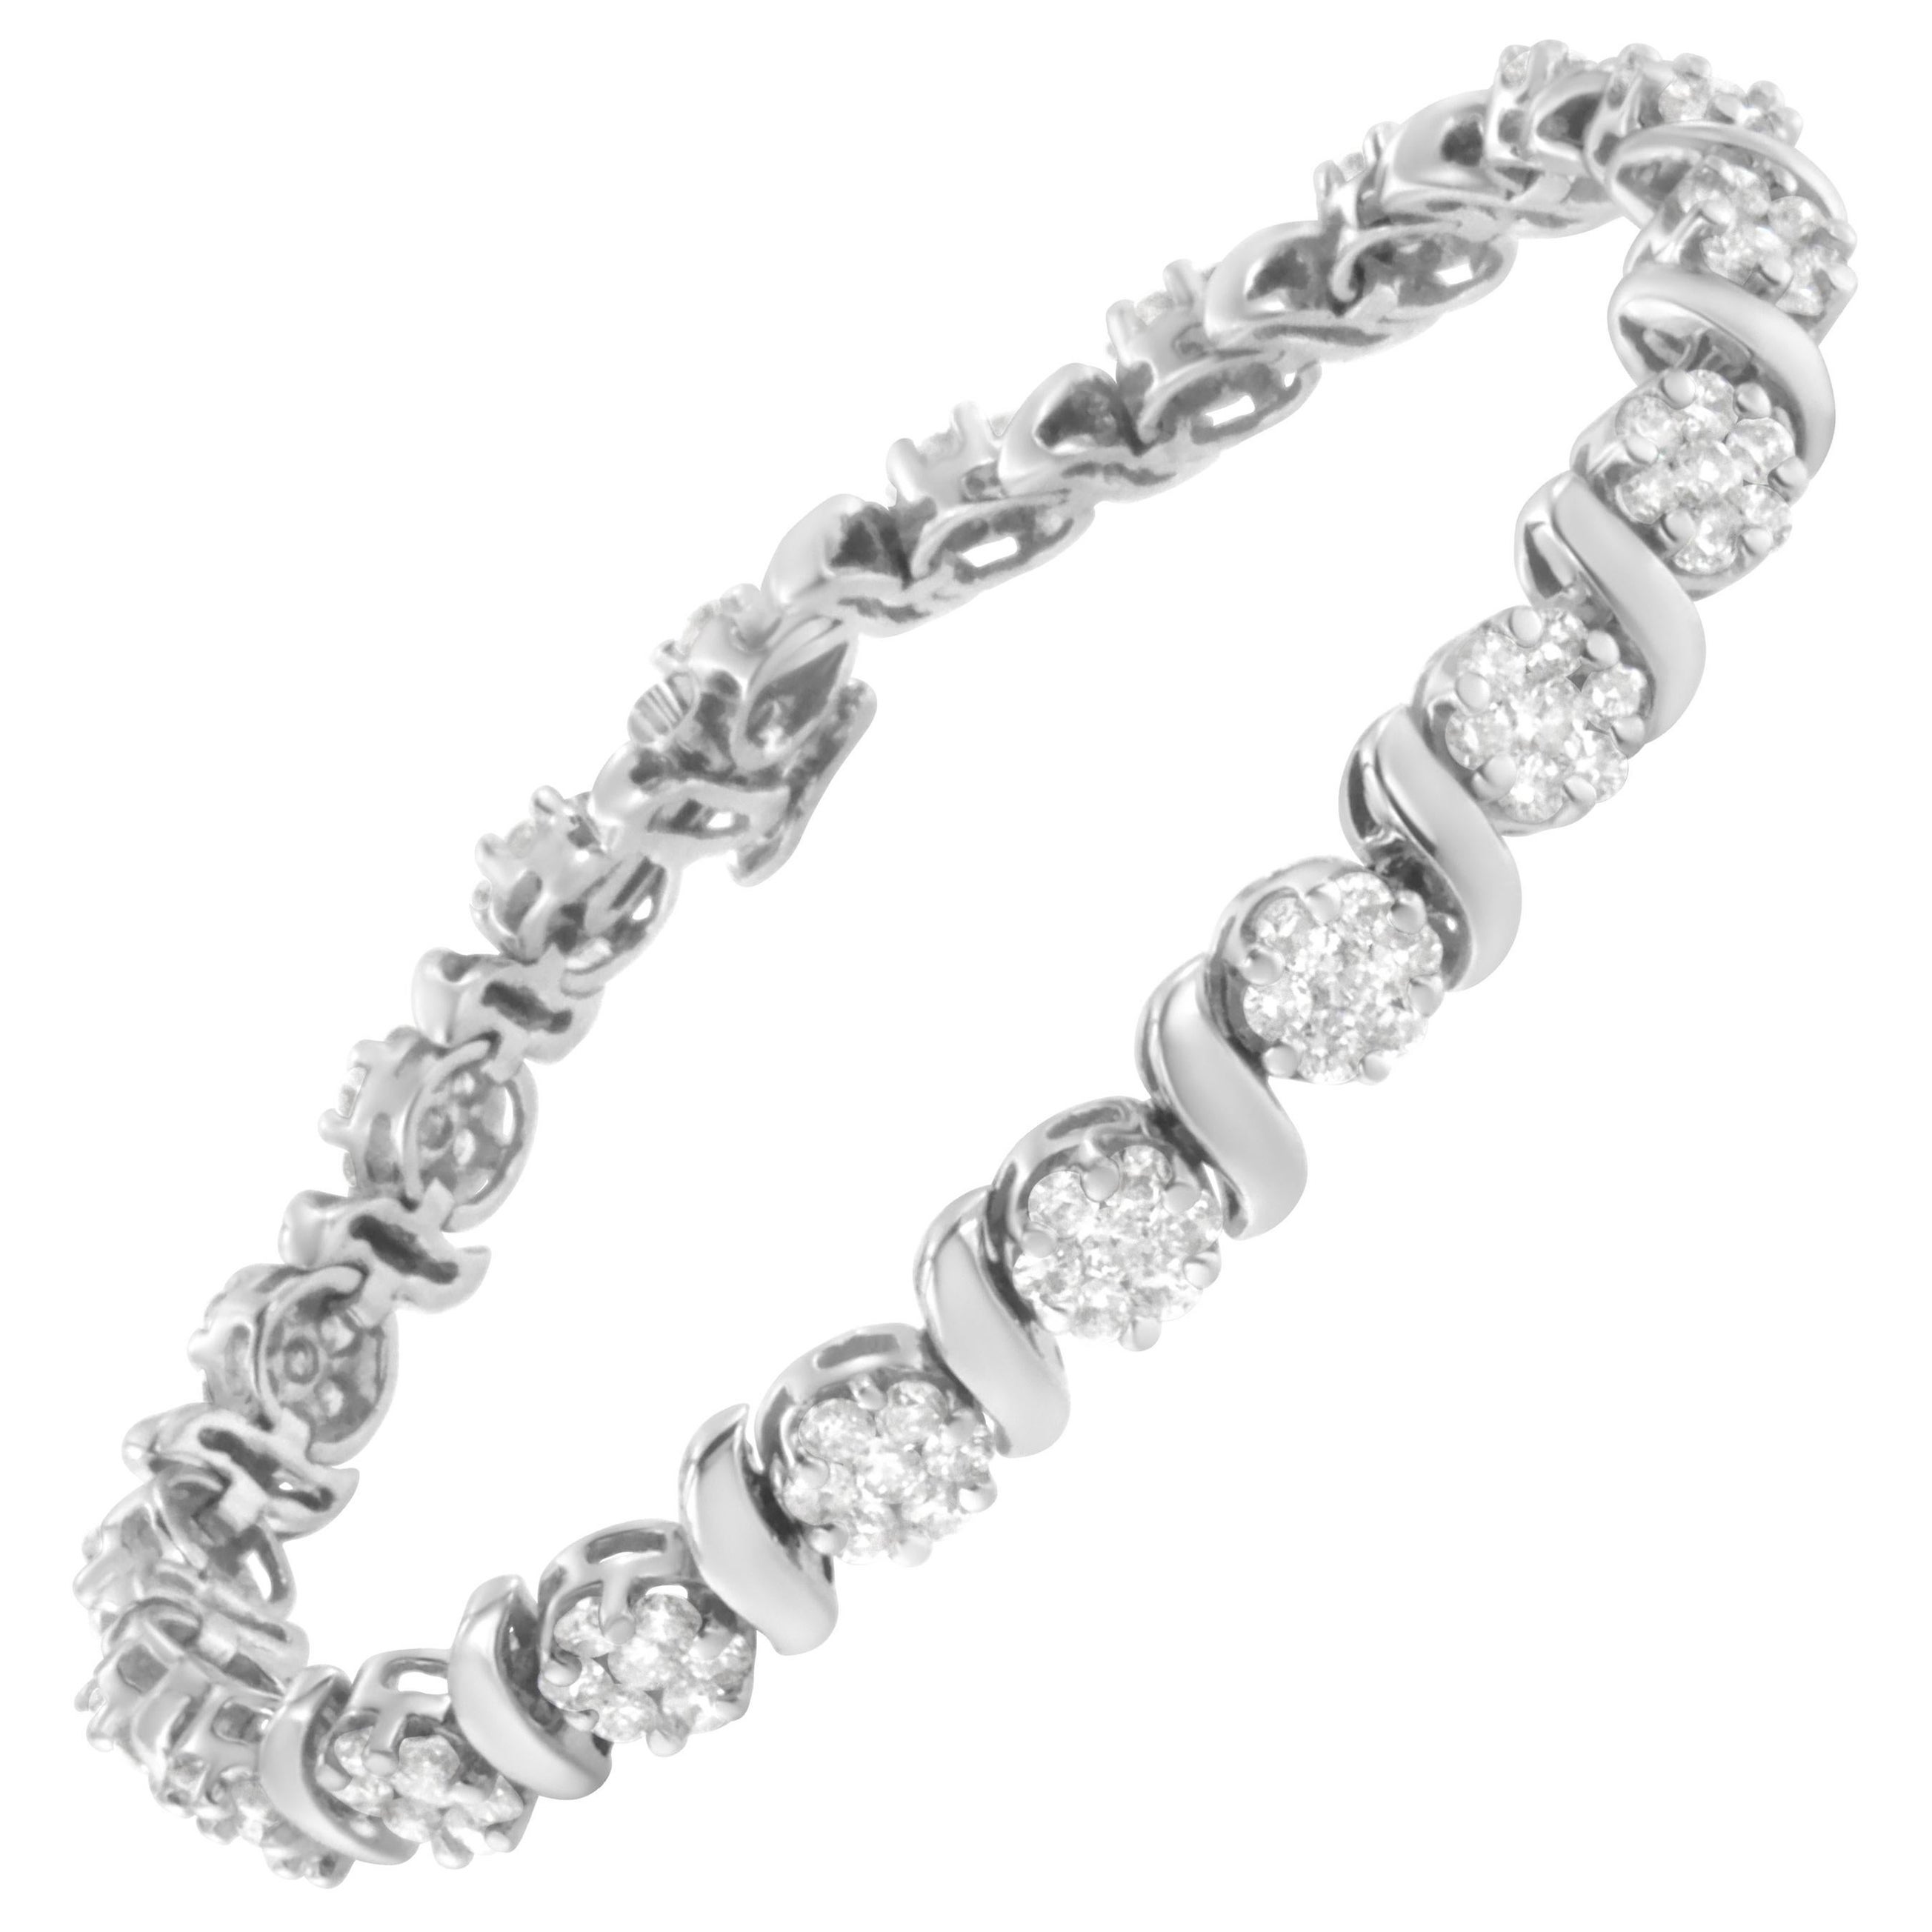 14K White Gold 5 1/4 Carat Diamond S-Link Floral Cluster Tennis Bracelet